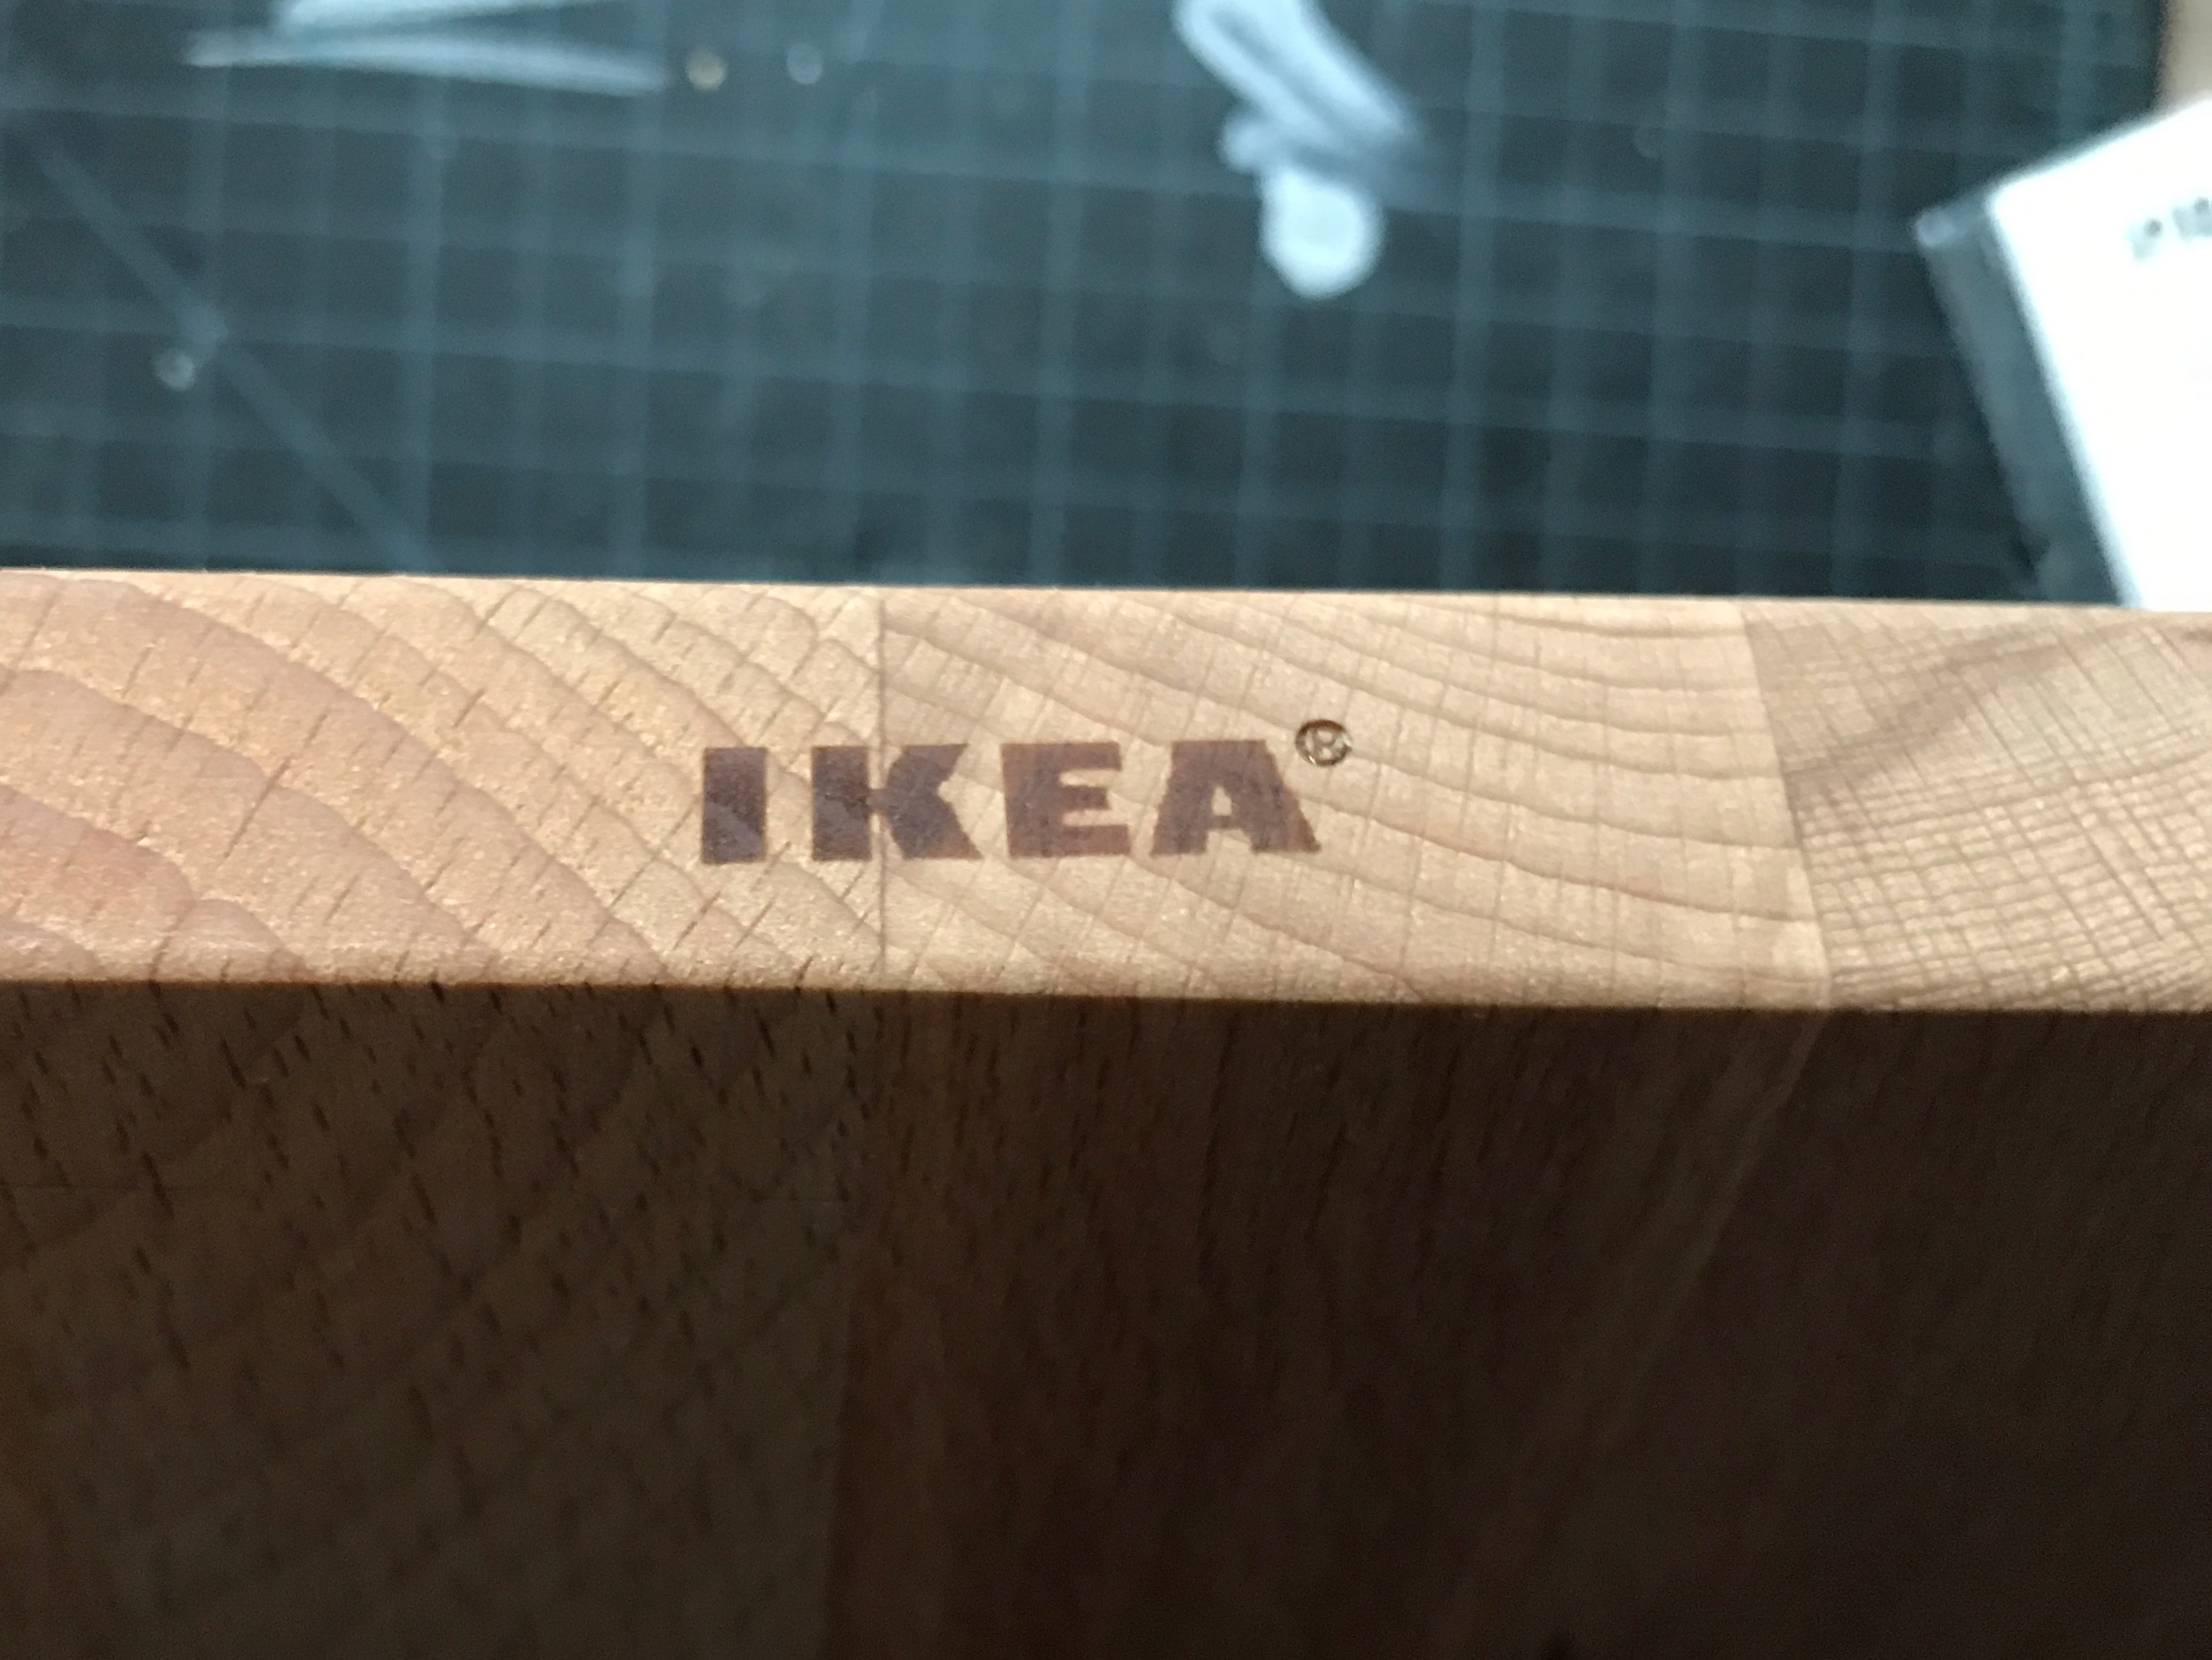 Ikea Cutting Board - Quick Project - Danielle Wethington